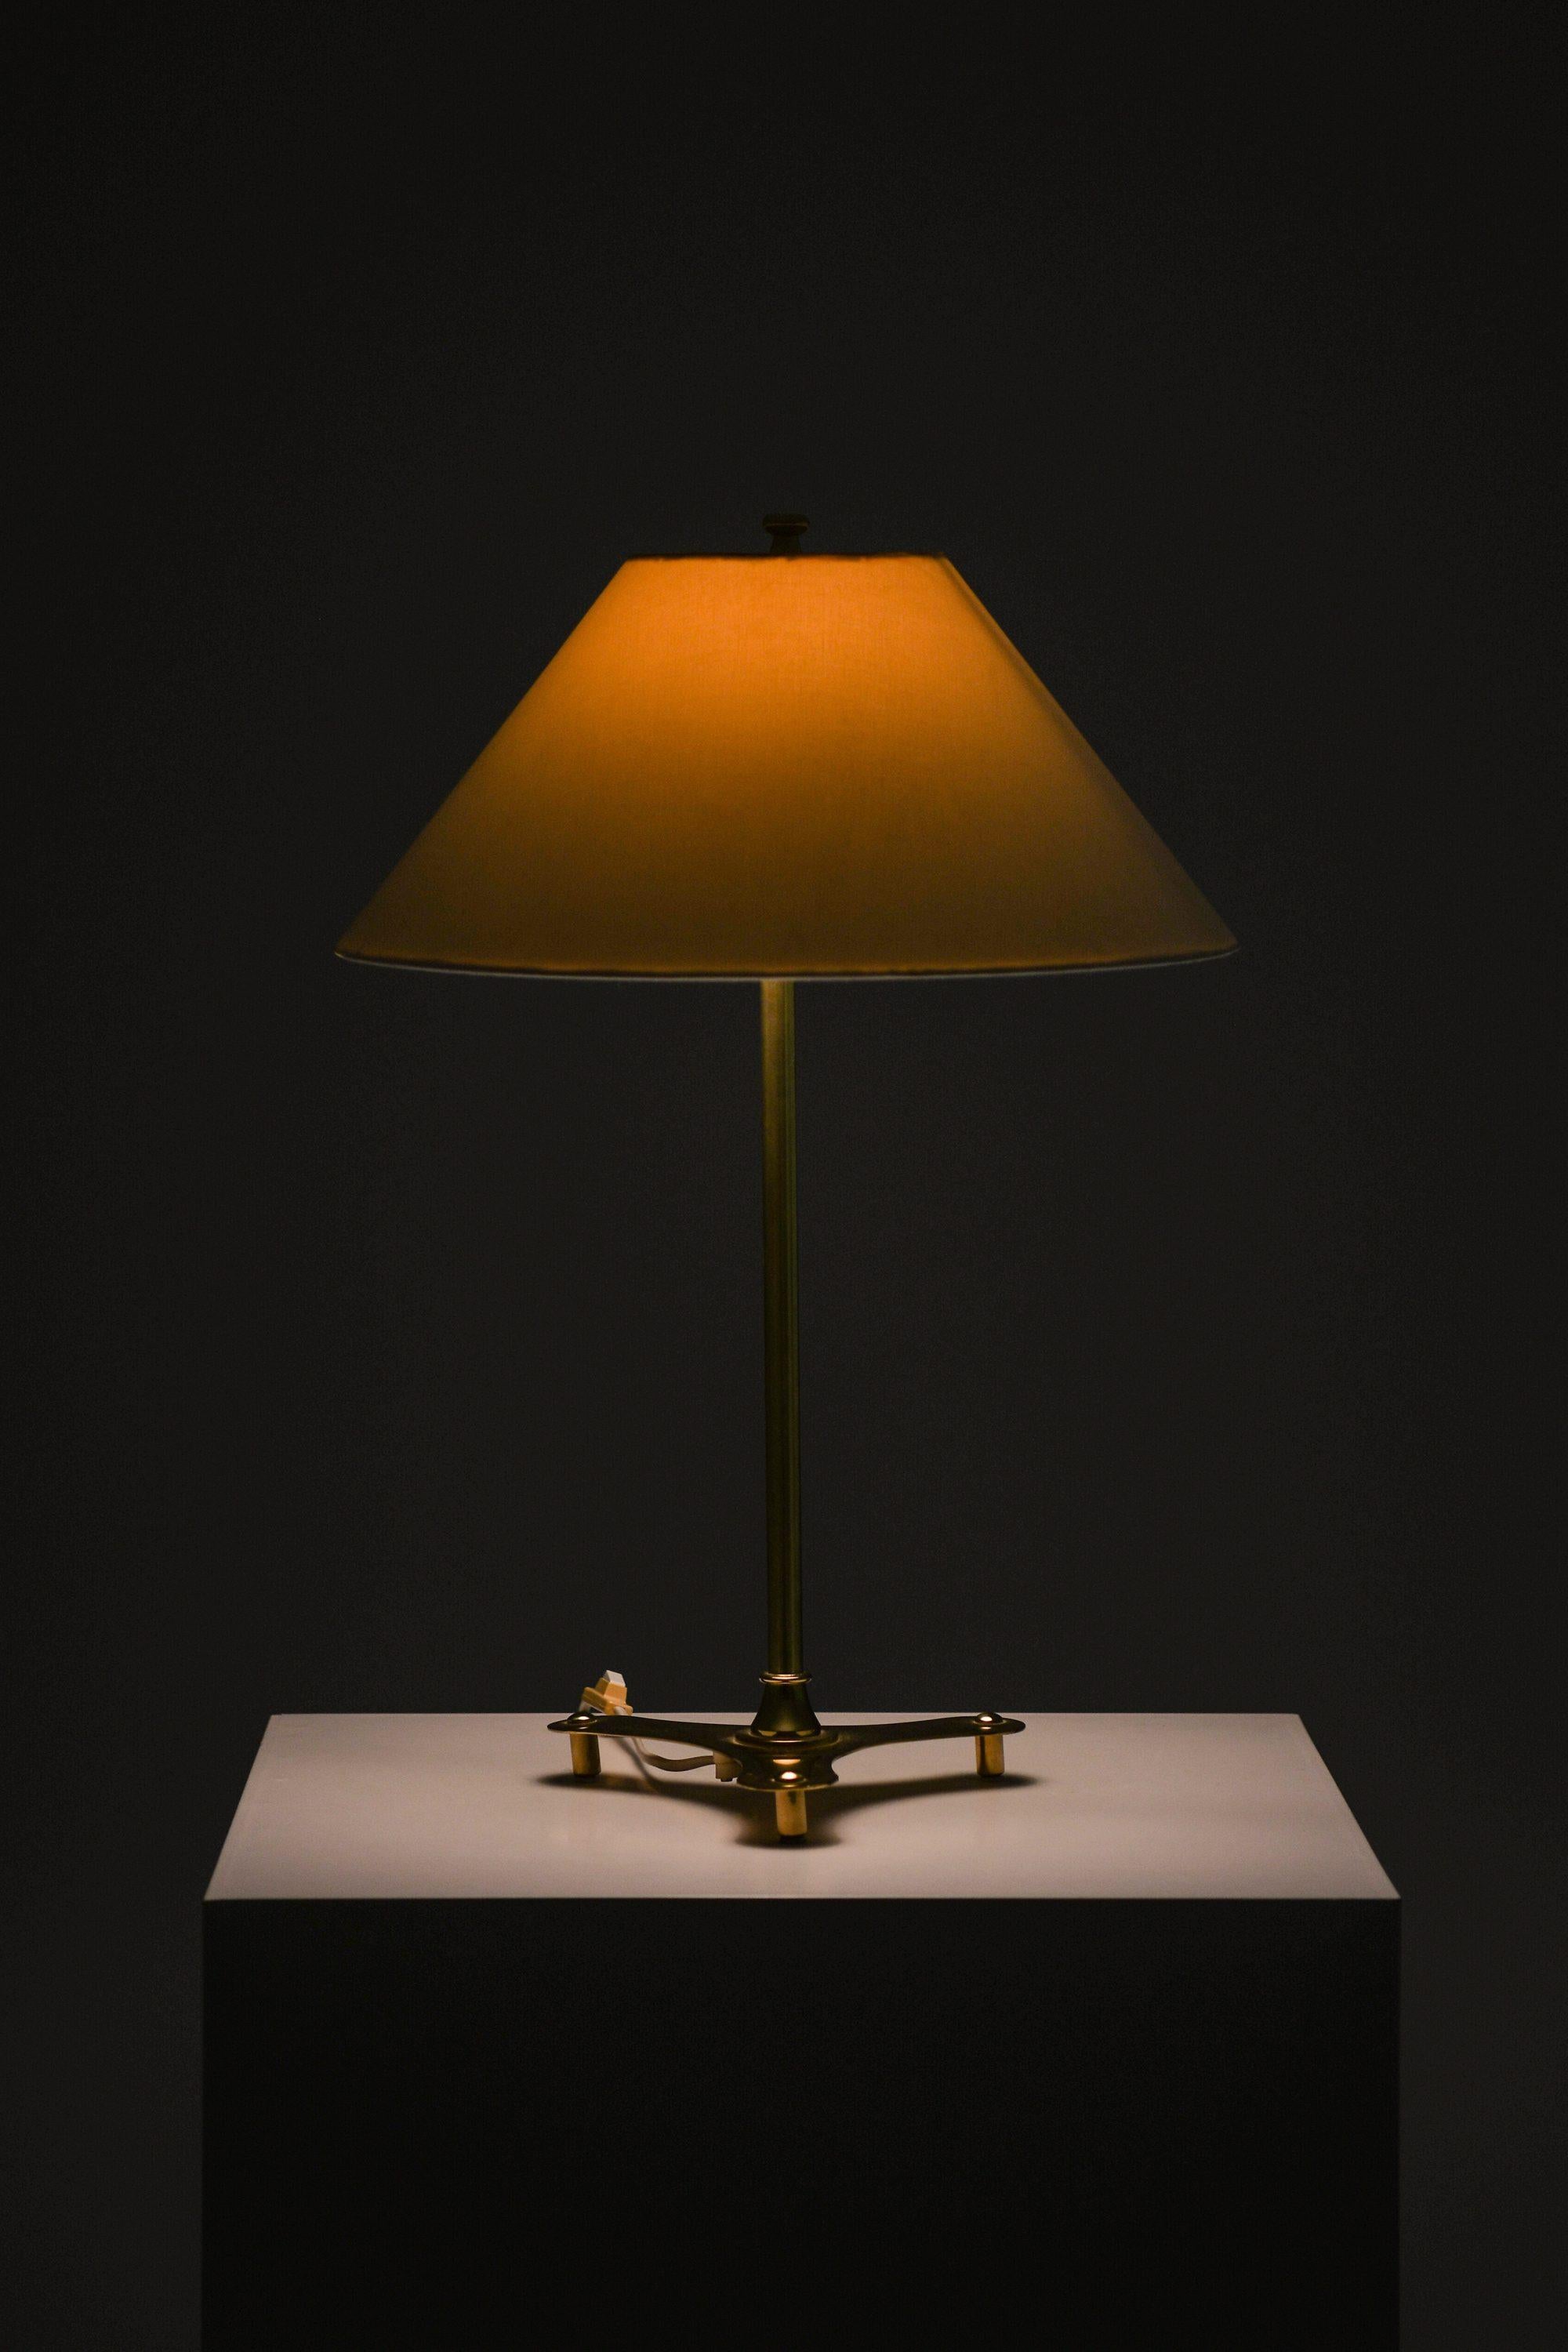 Scandinavian Modern Table Lamp in Brass and Original Lamp Shade by Josef Frank, 1960's Svenskt Tenn For Sale